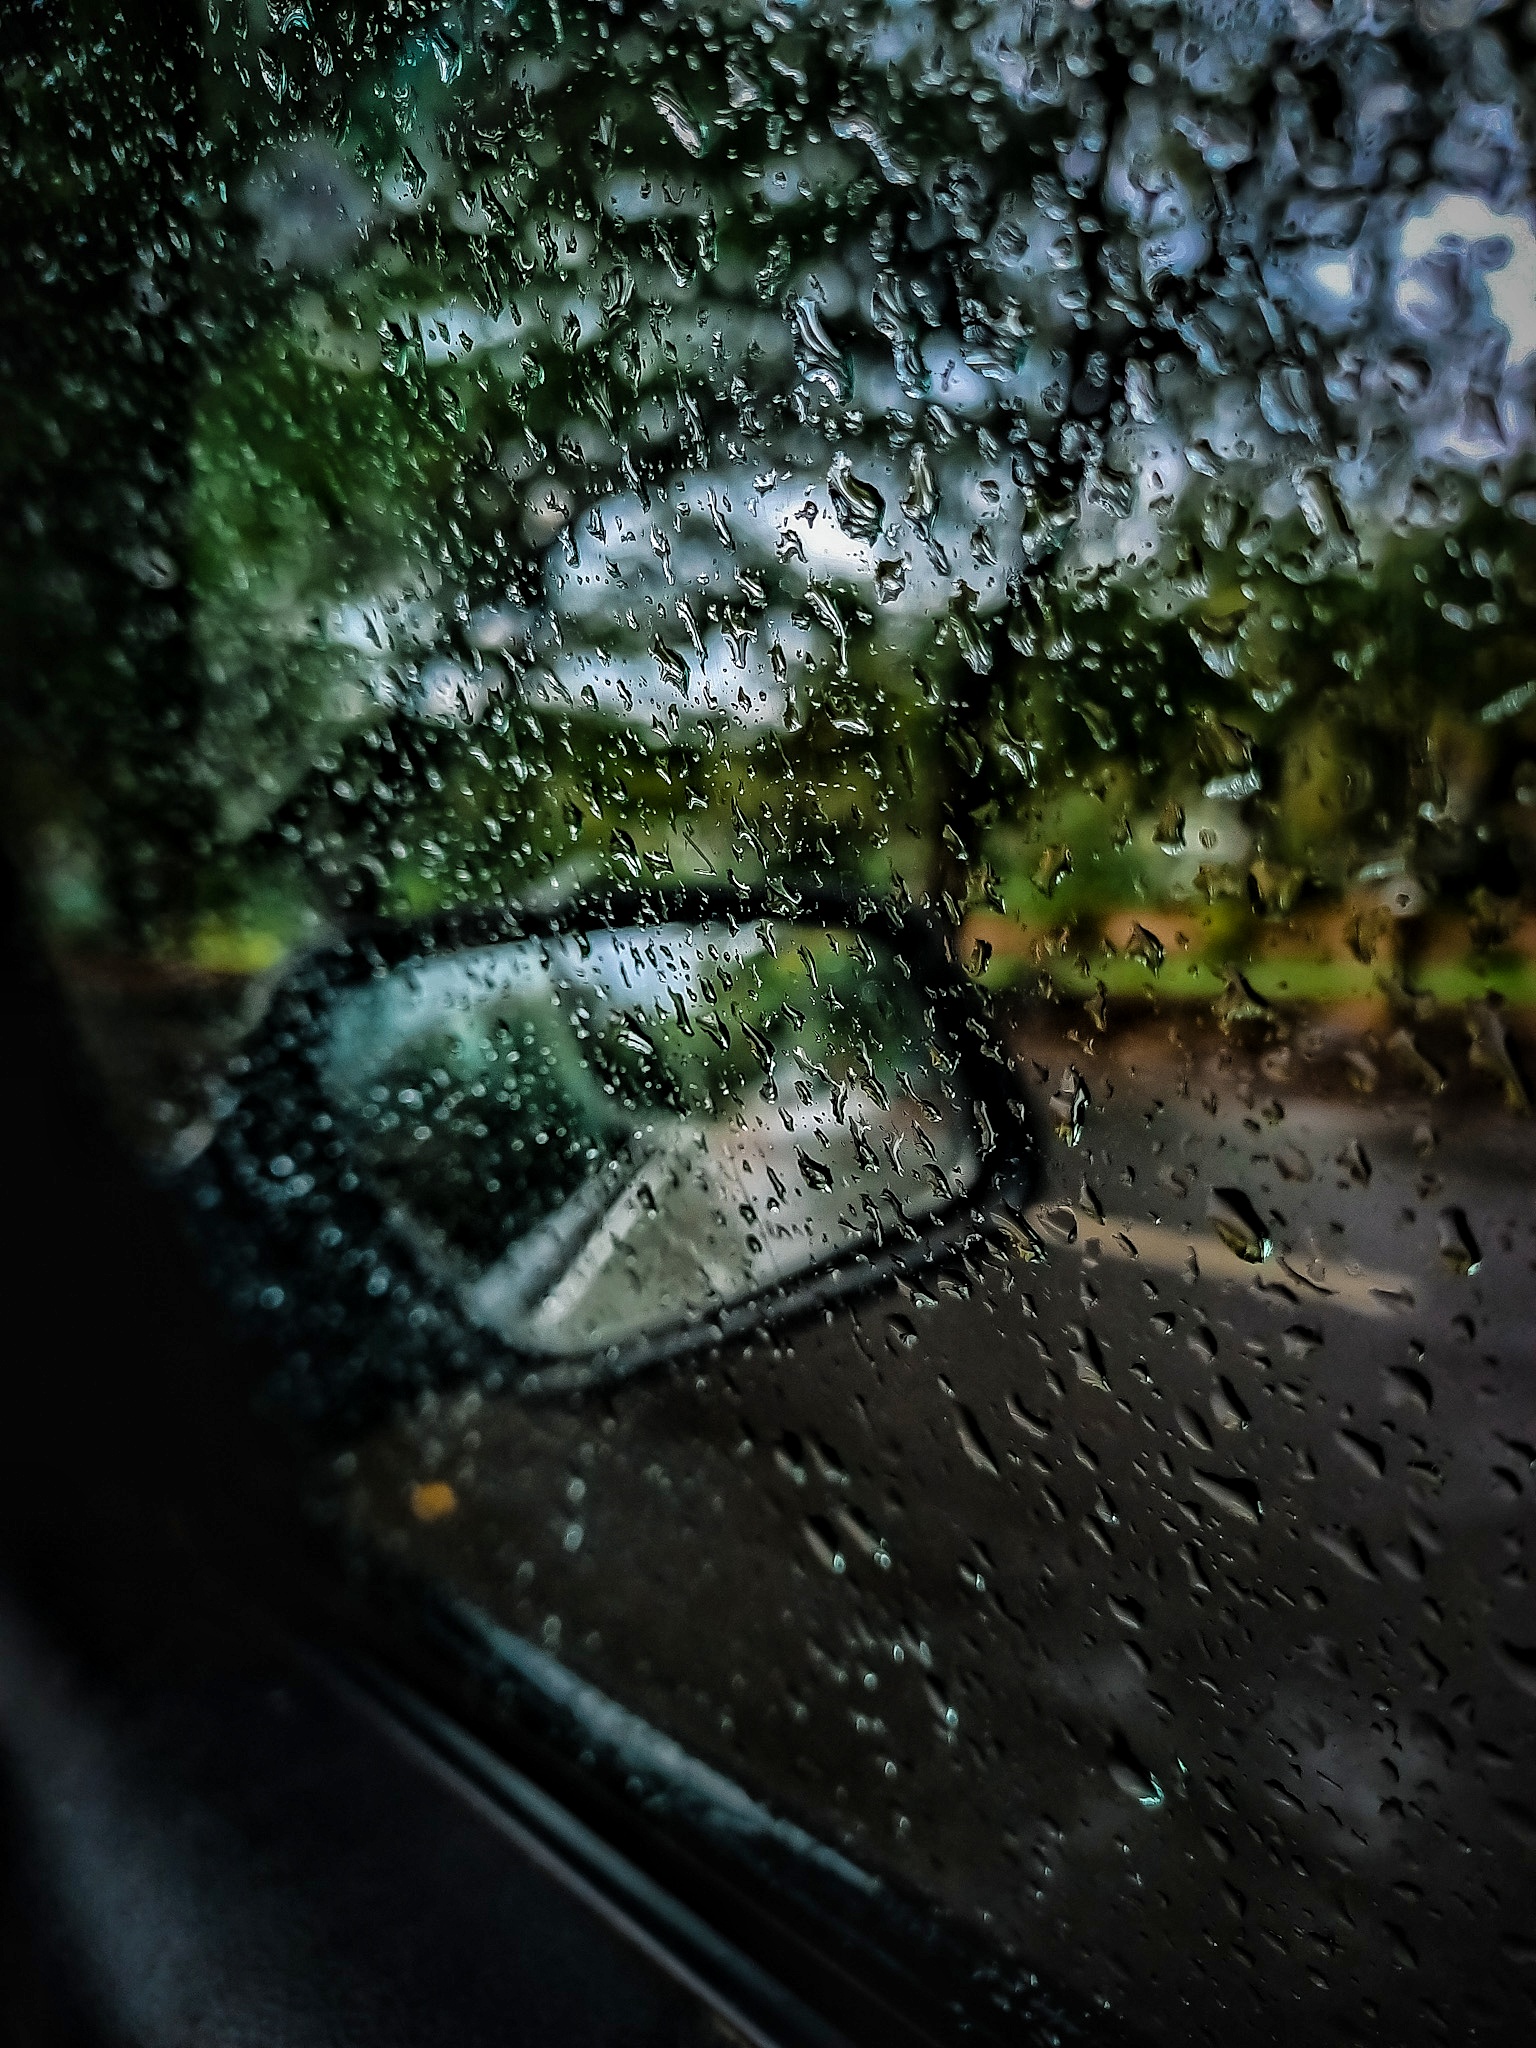 Rainfall from a car's window